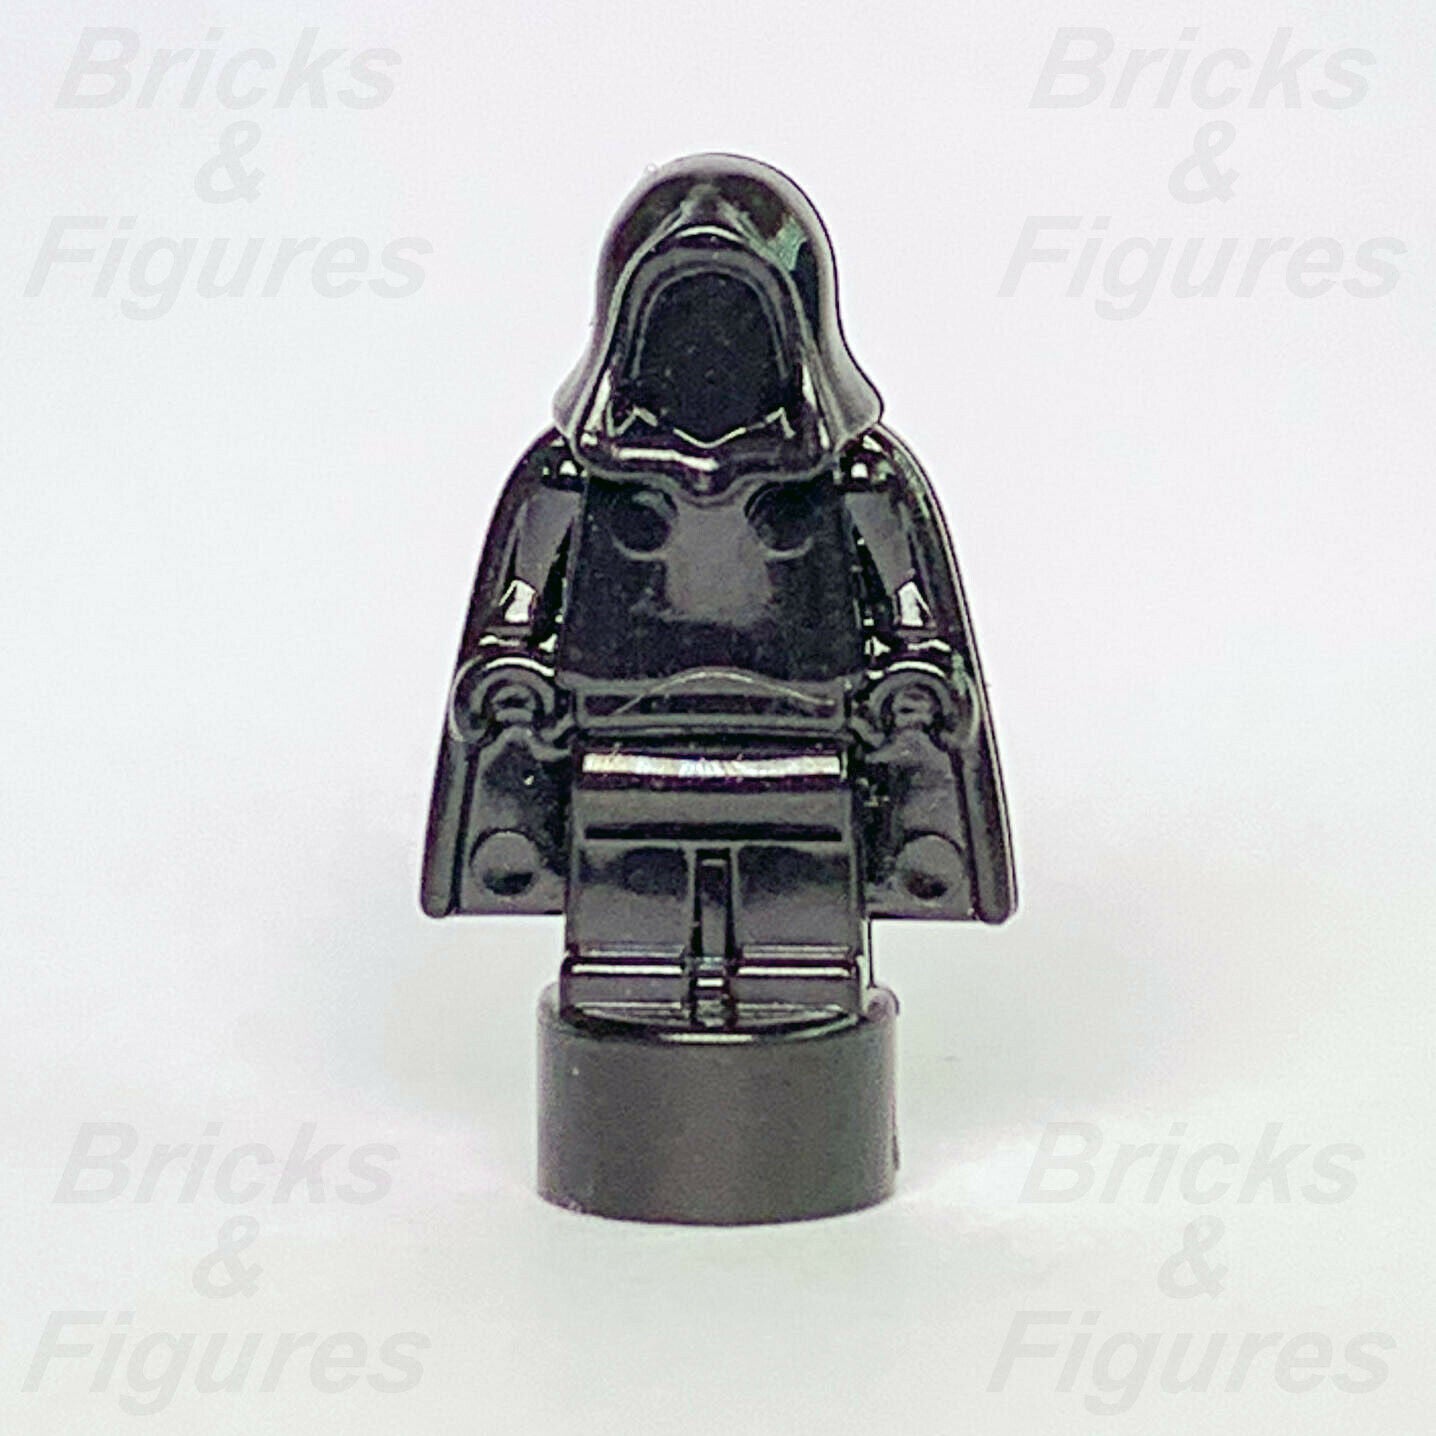 New Star Wars LEGO Statuette Sith Jedi Dementor Statue Mini Part 75251 71043 - Bricks & Figures